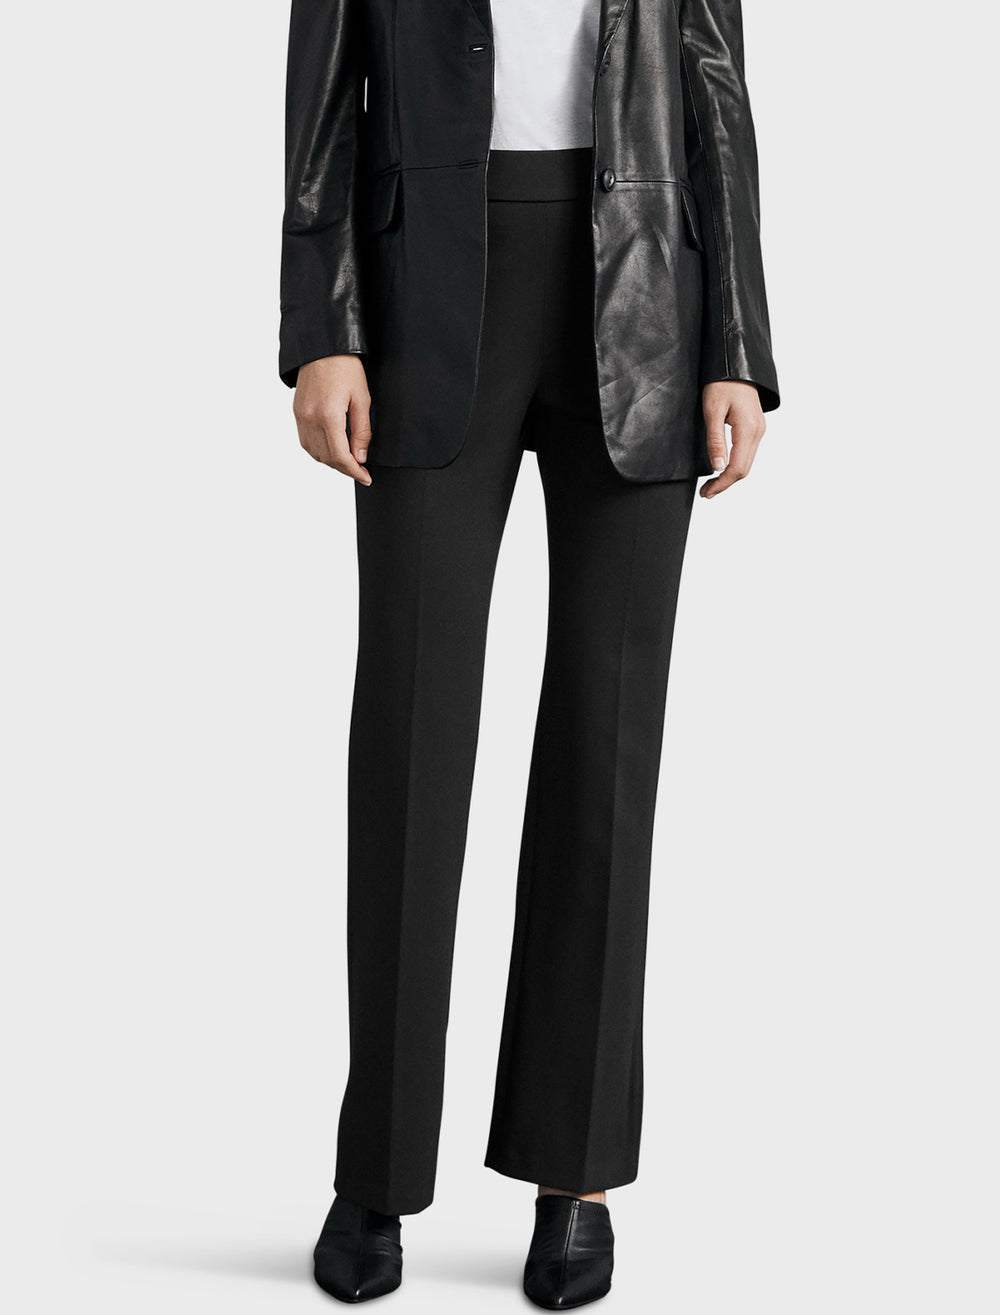 Model wearing Rag & Bone's Irina Ponte Pant in Black.